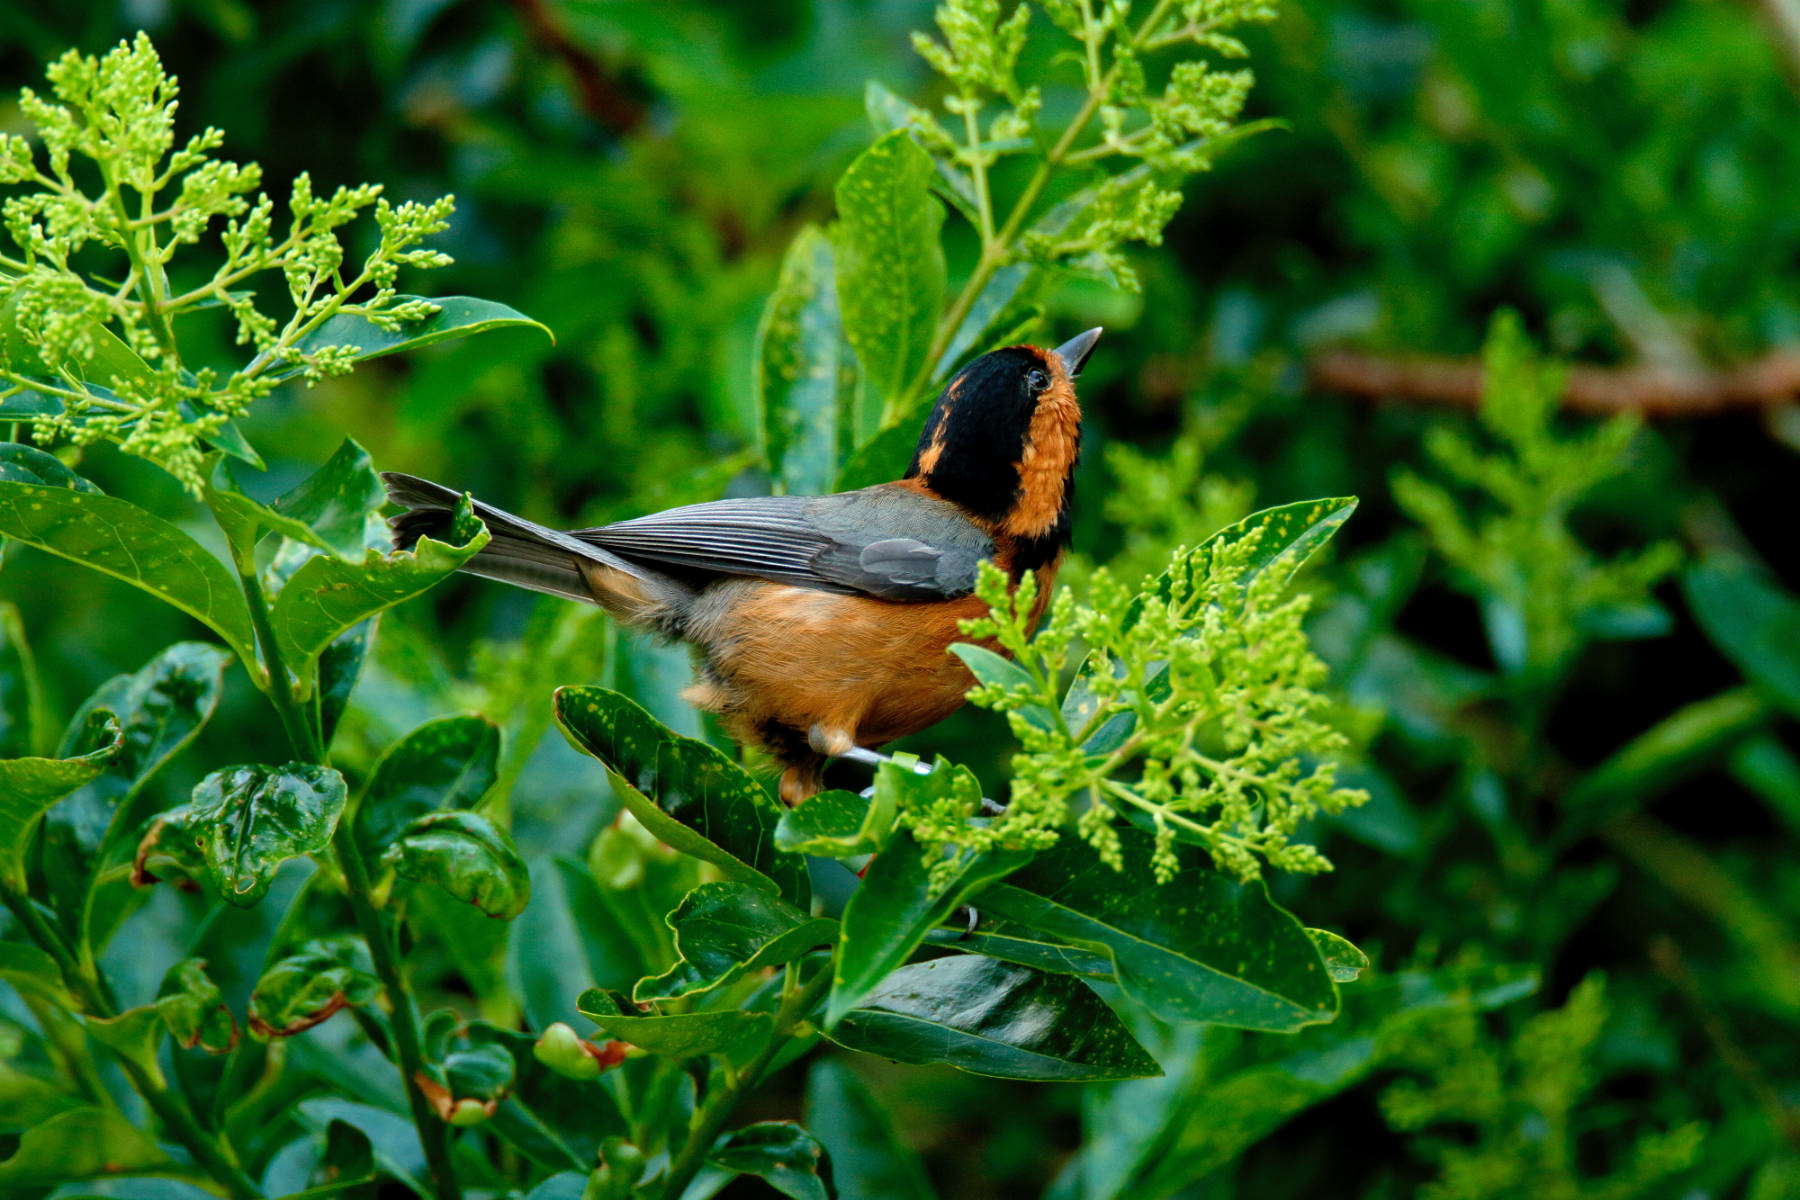 Canon Bird Branch Project Biodiversity Initiatives Bird Photo Guide